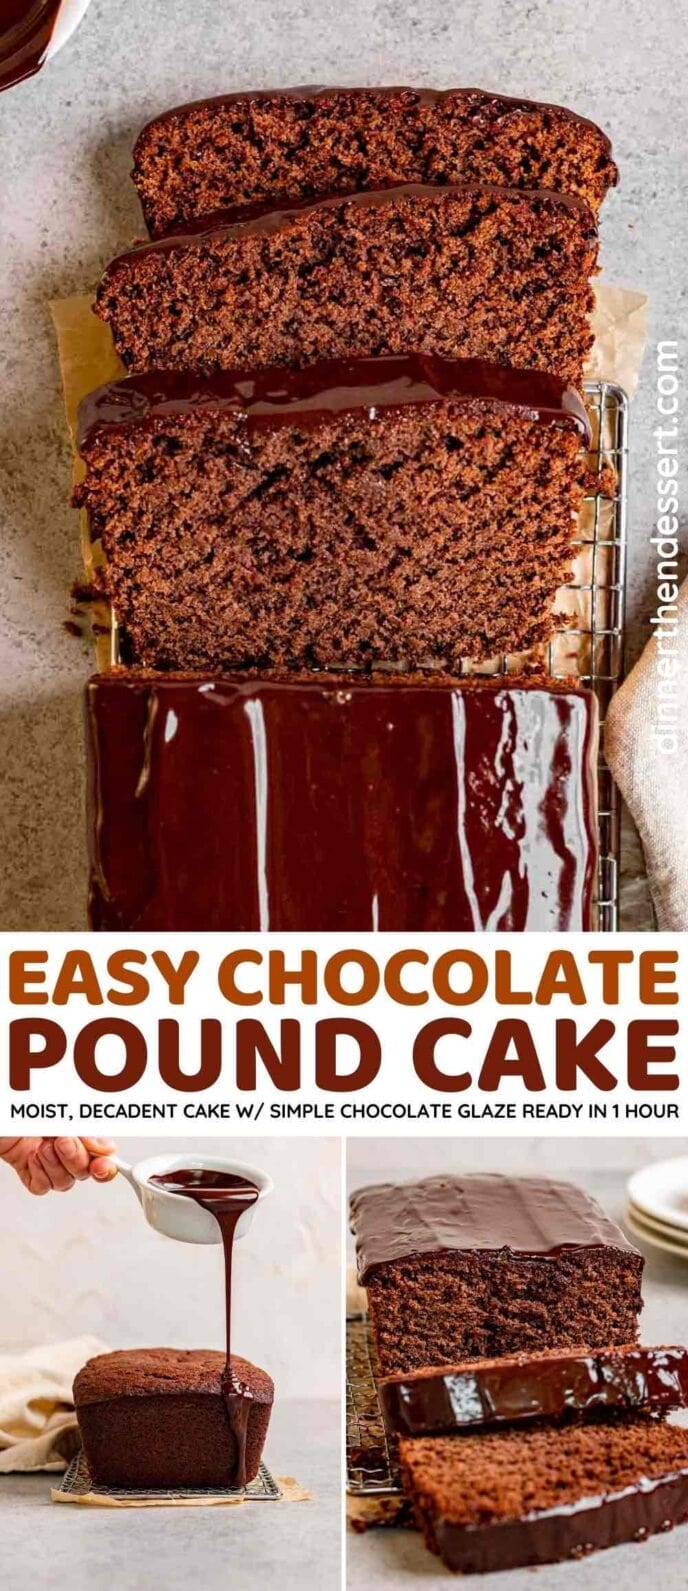 Chocolate Pound Cake collage